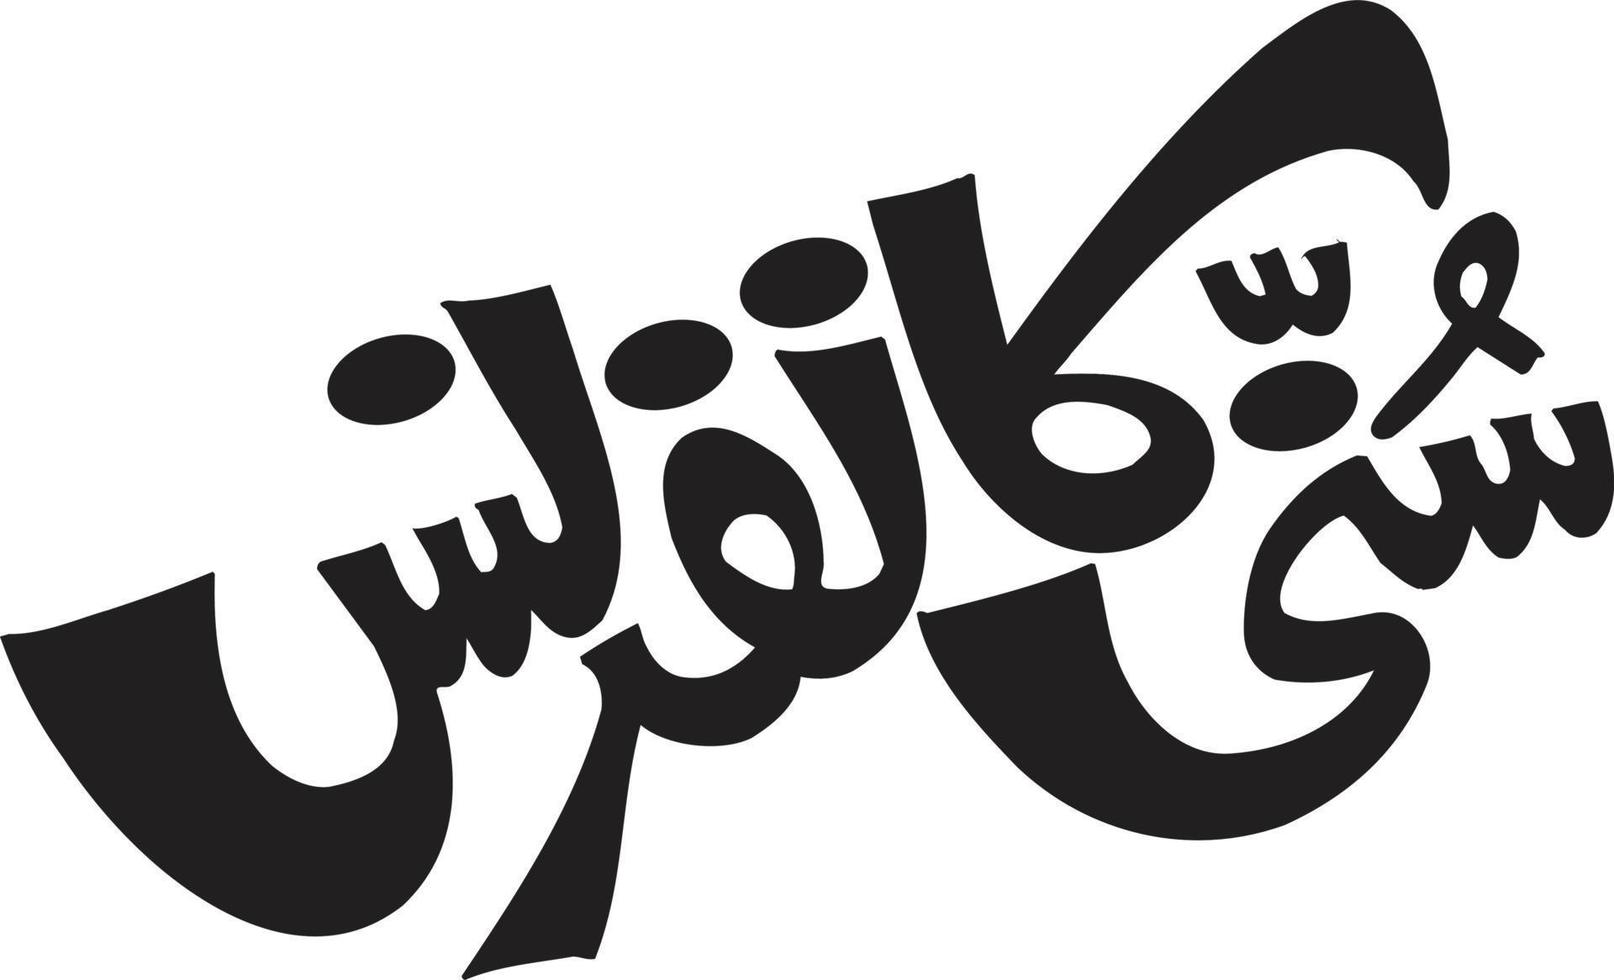 vetor livre de caligrafia árabe urdu islâmica suni kafrens